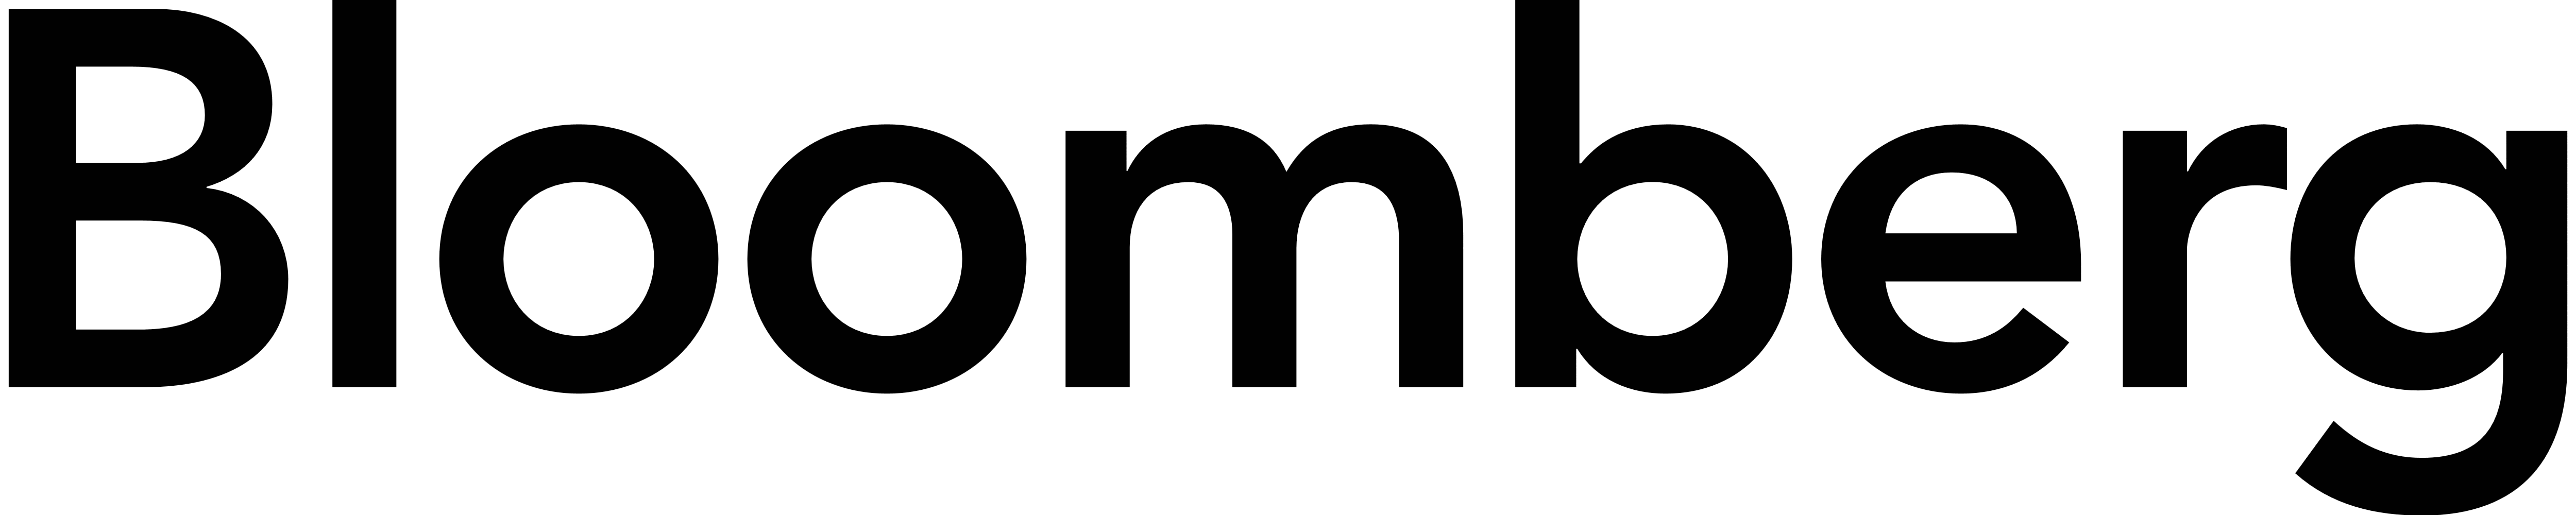 Bloomberg logo, logotype, emblem